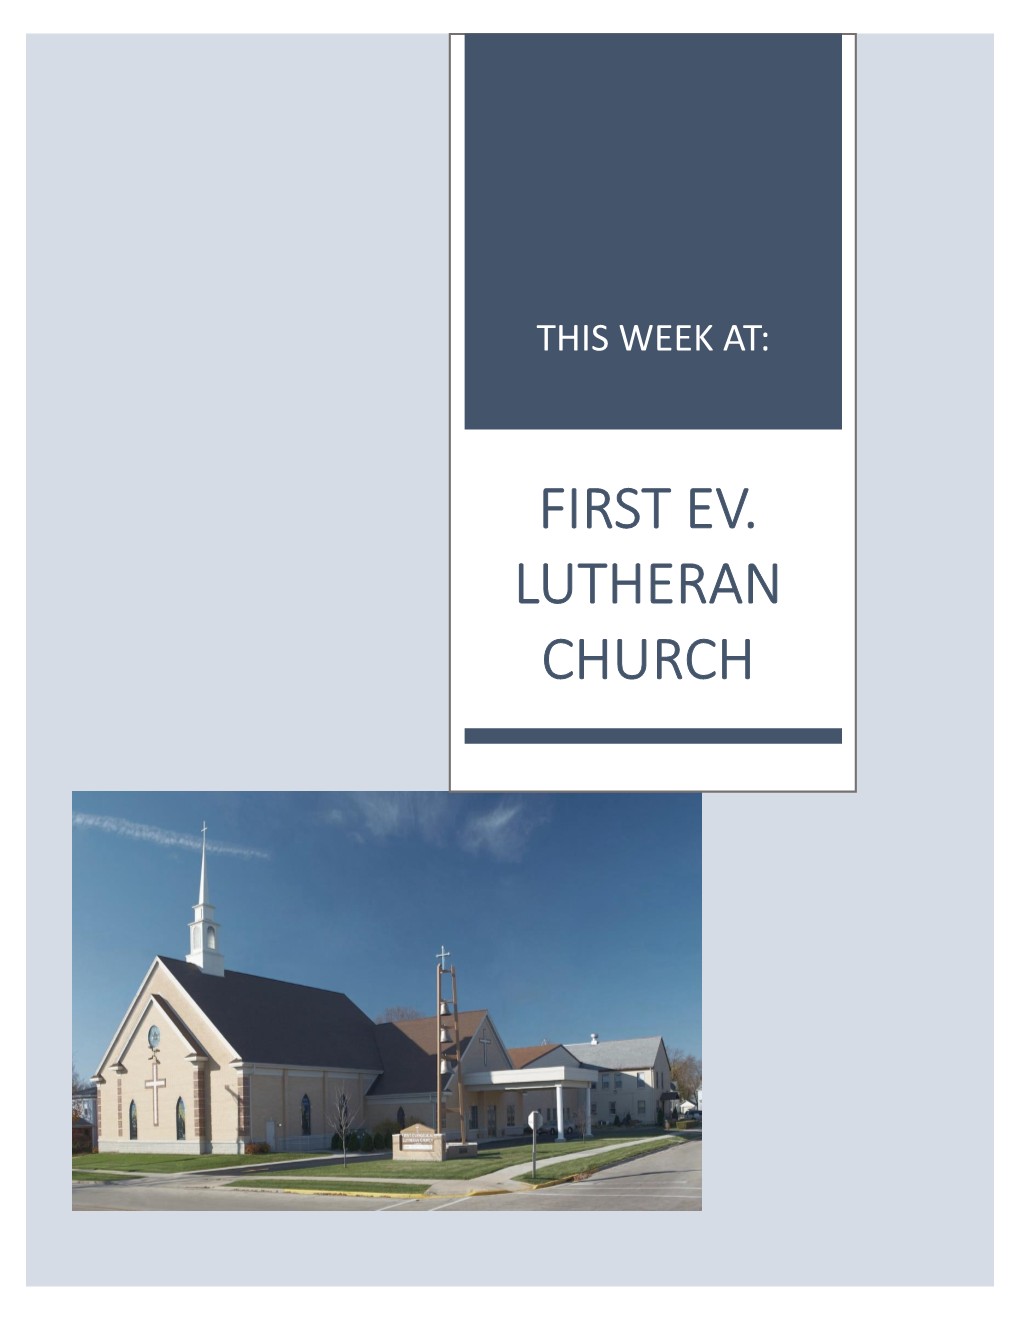 First Ev. Lutheran Church